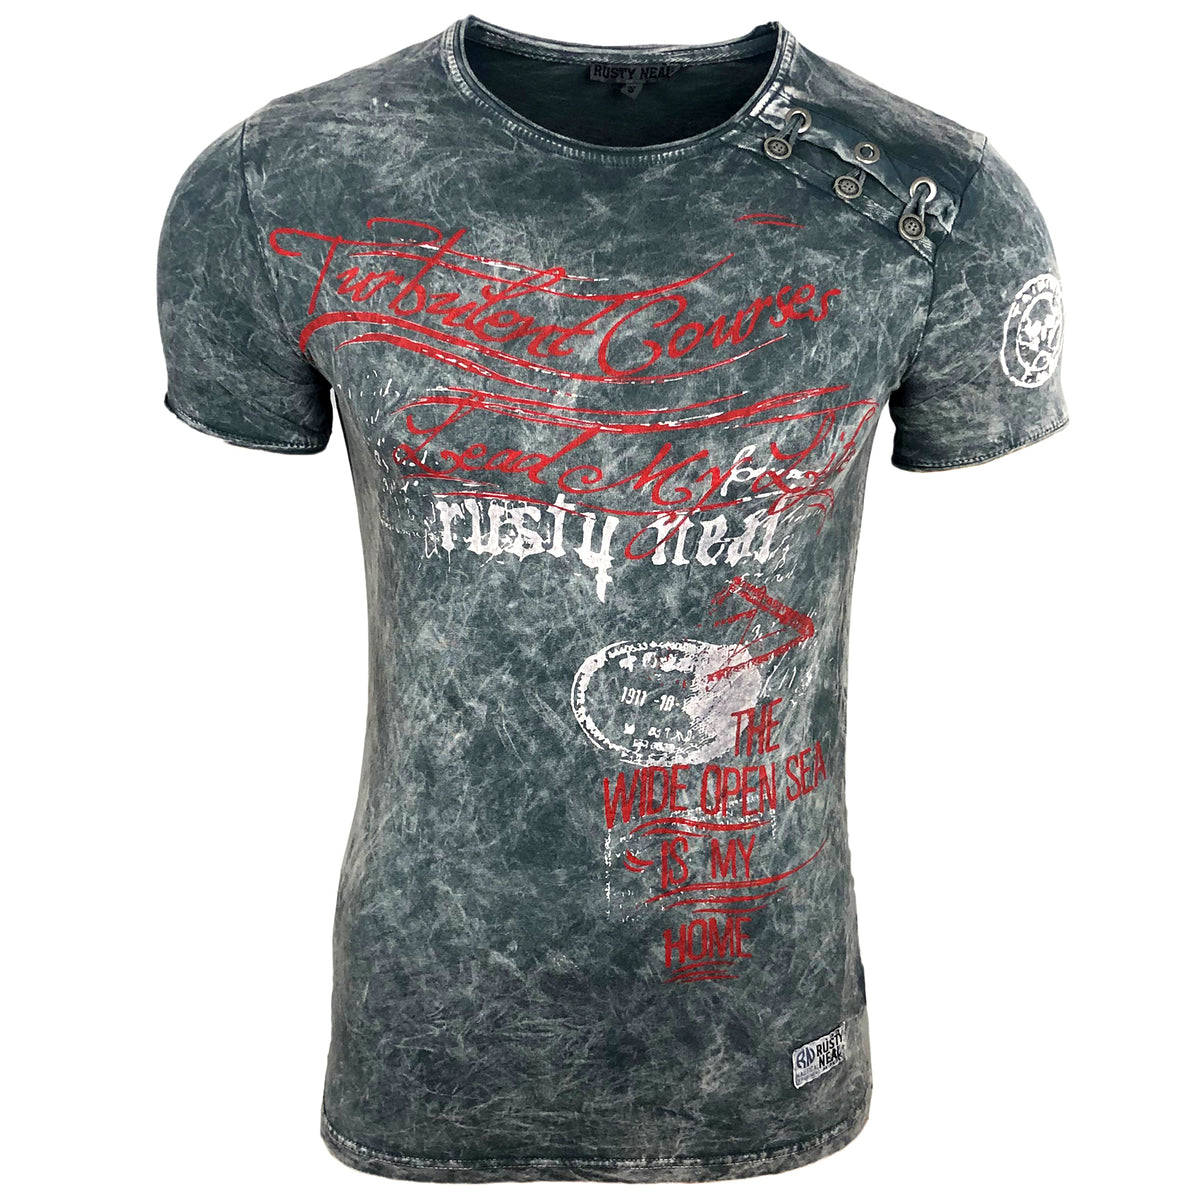 Rusty Neal Herren Shirt Kurzarm mit Print und Used Look